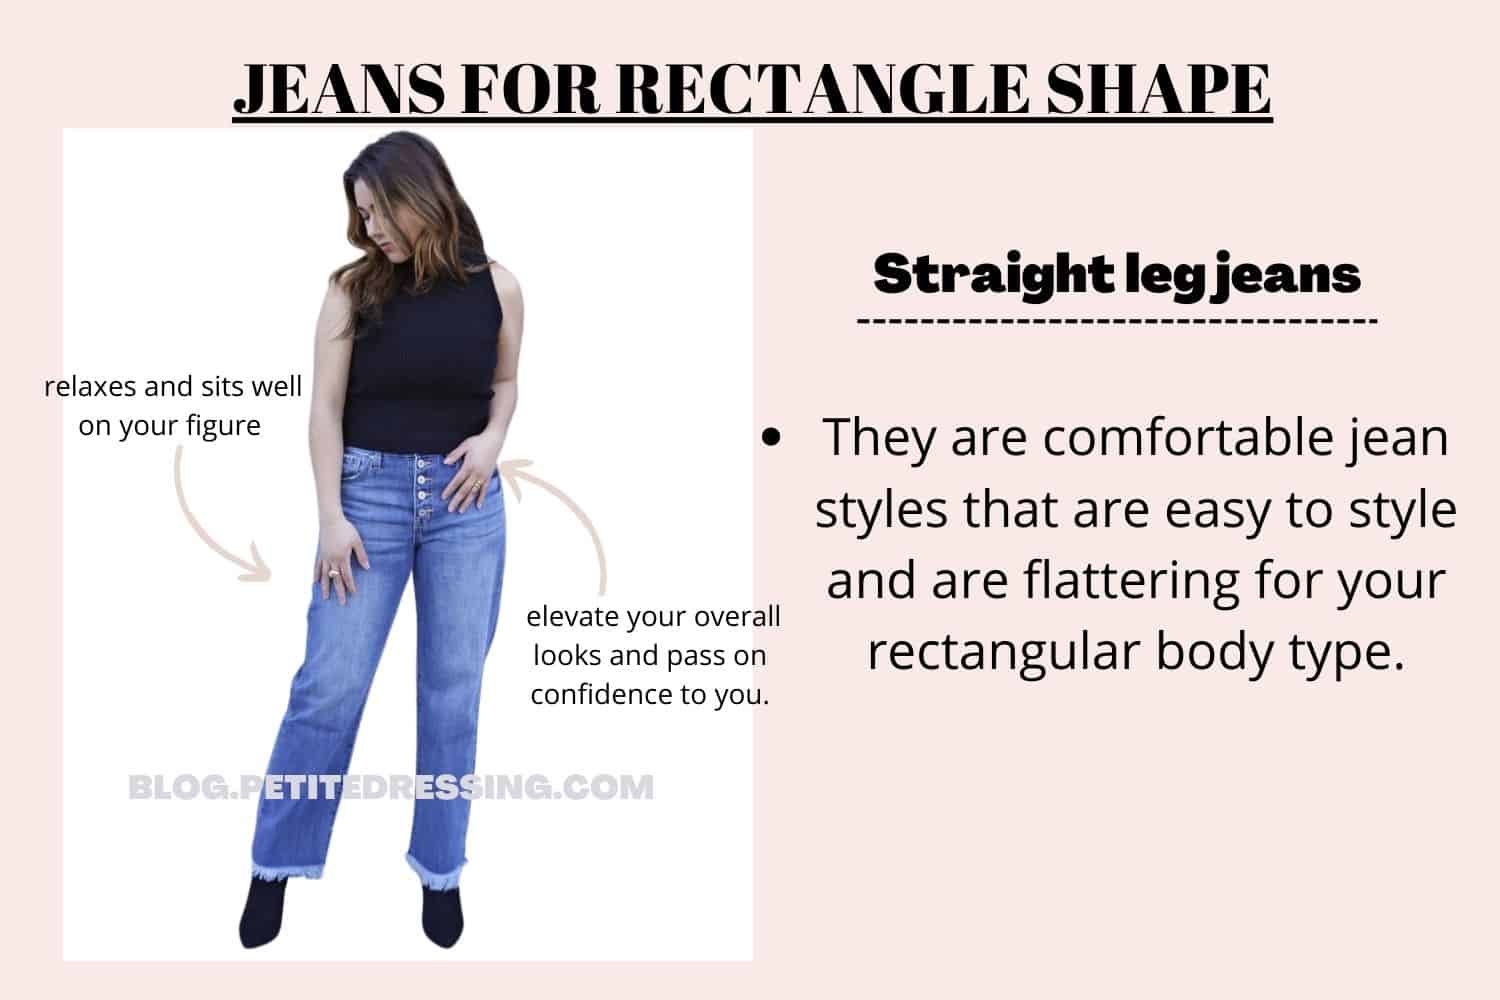 mengen Trek Isoleren The Complete Jeans Guide for the Rectangle Body Type